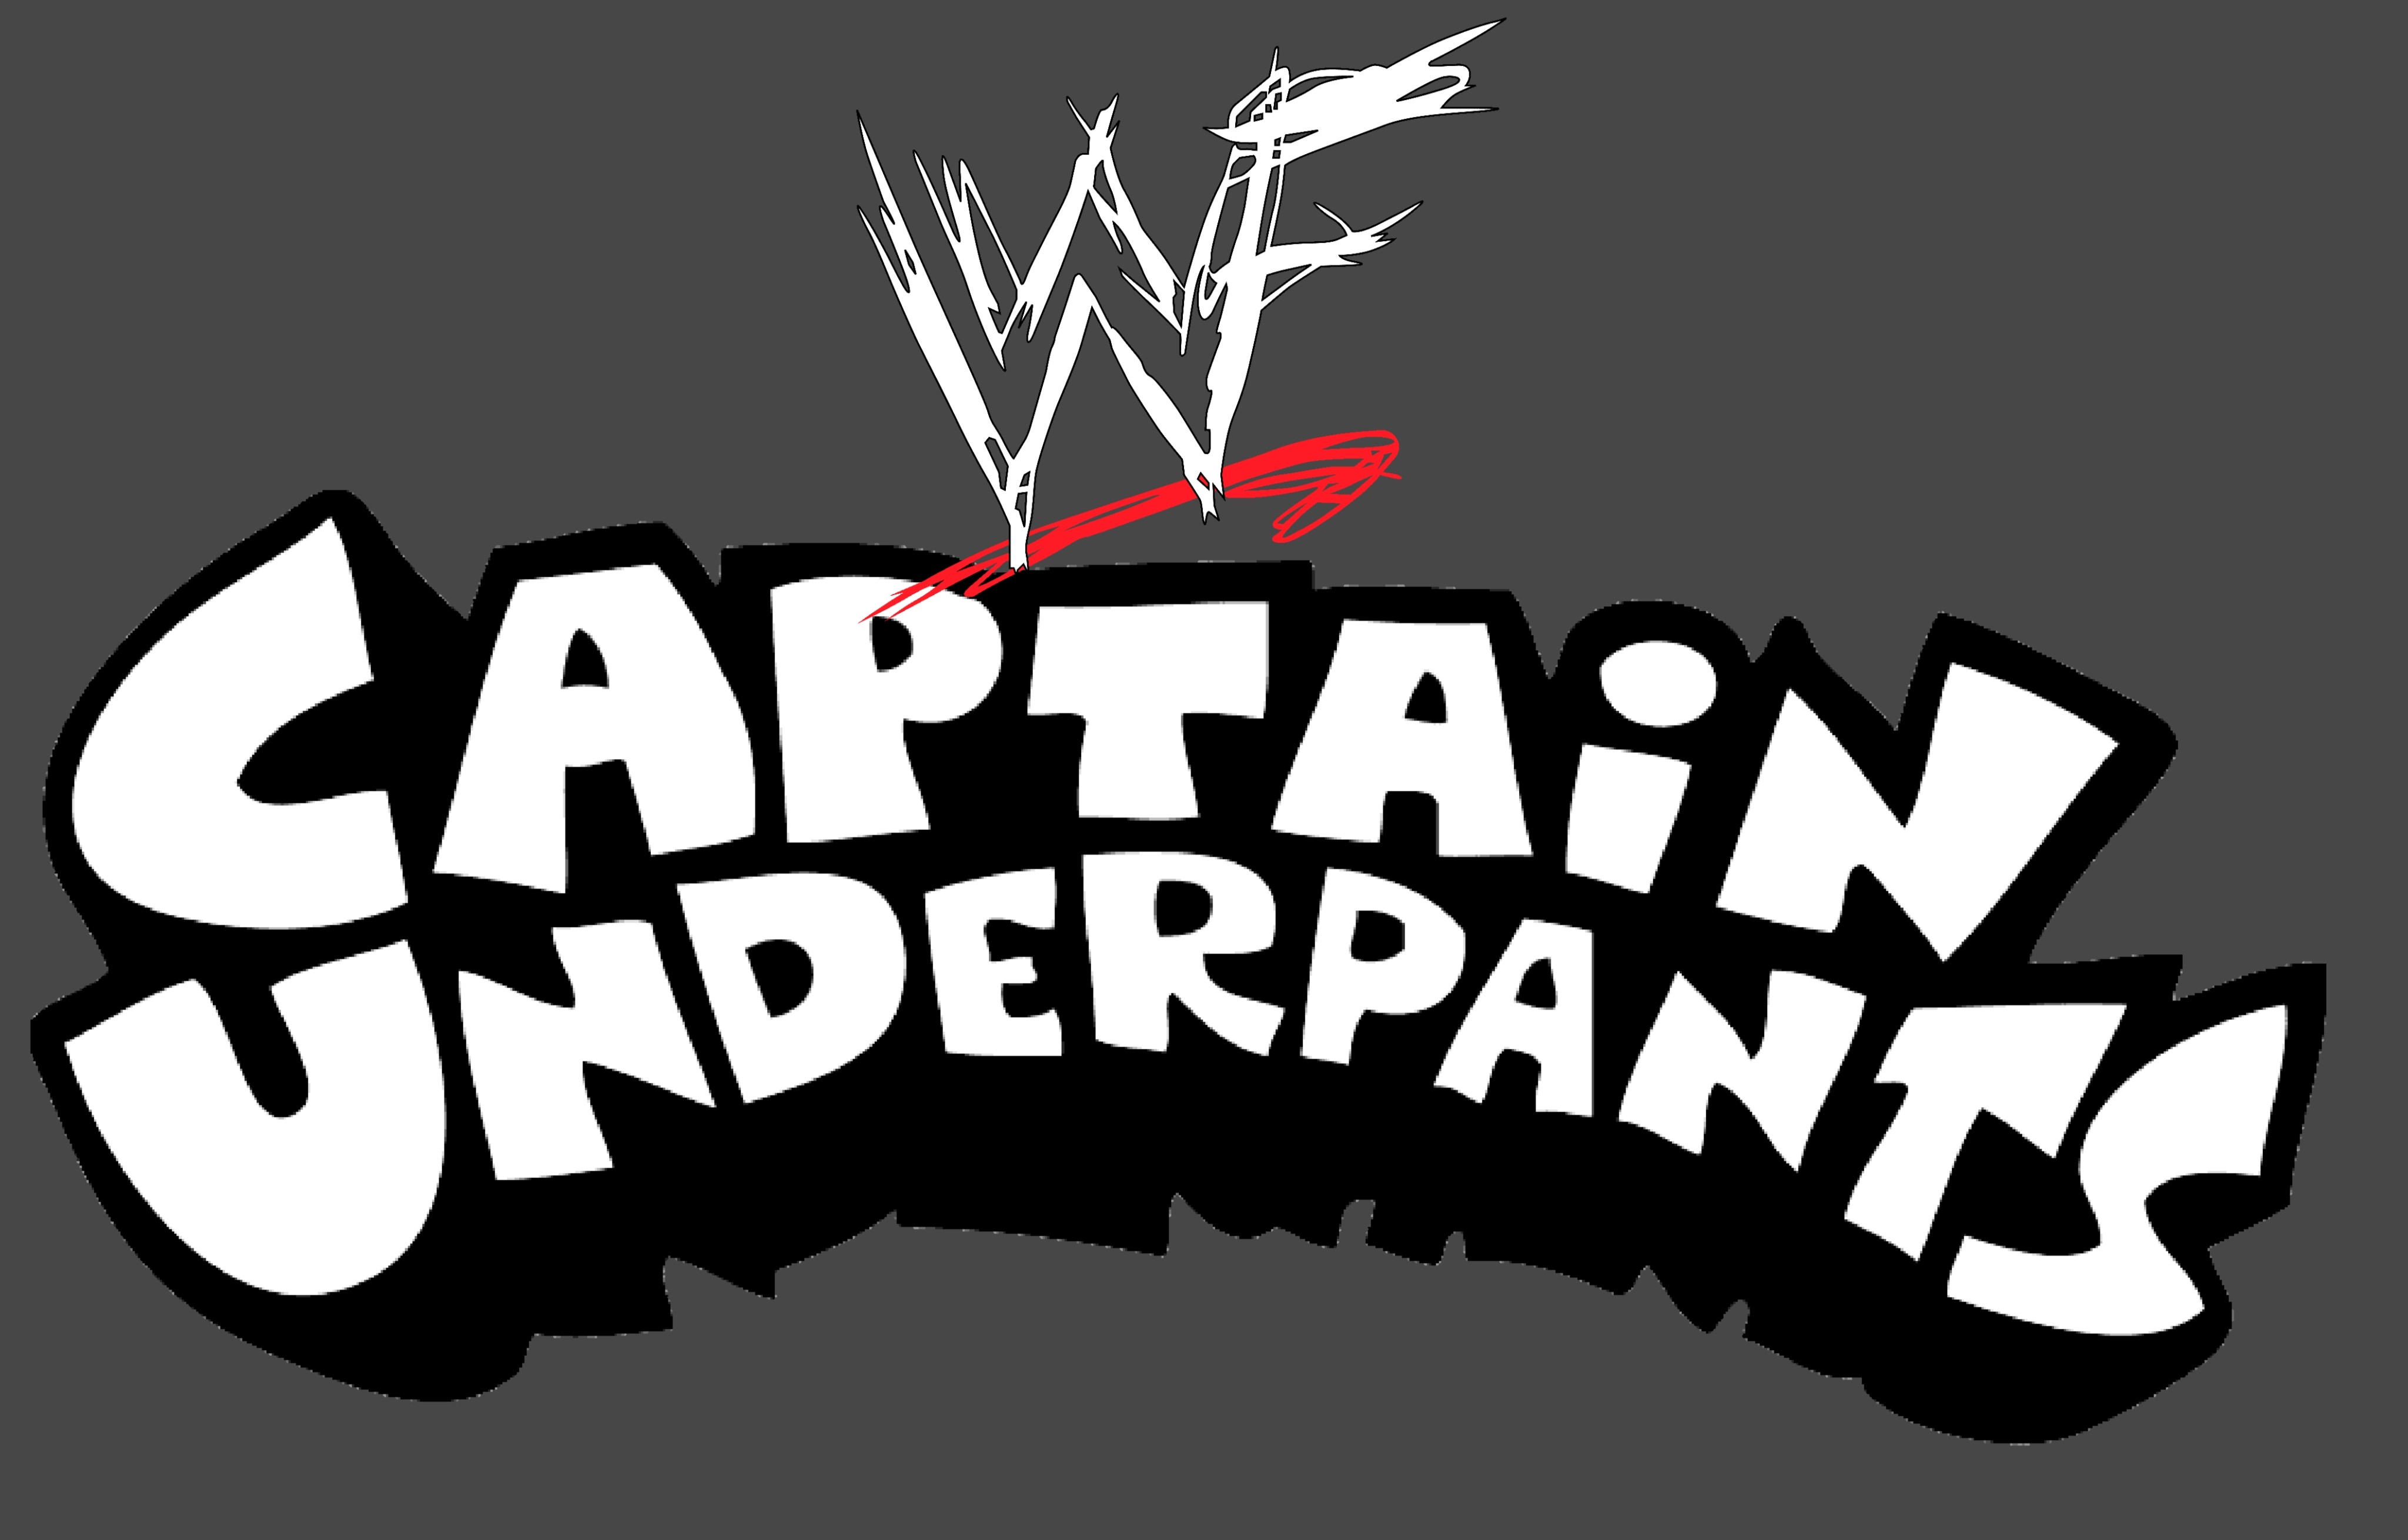 WWF Captain Underpants Logo by FSULover81506 on DeviantArt